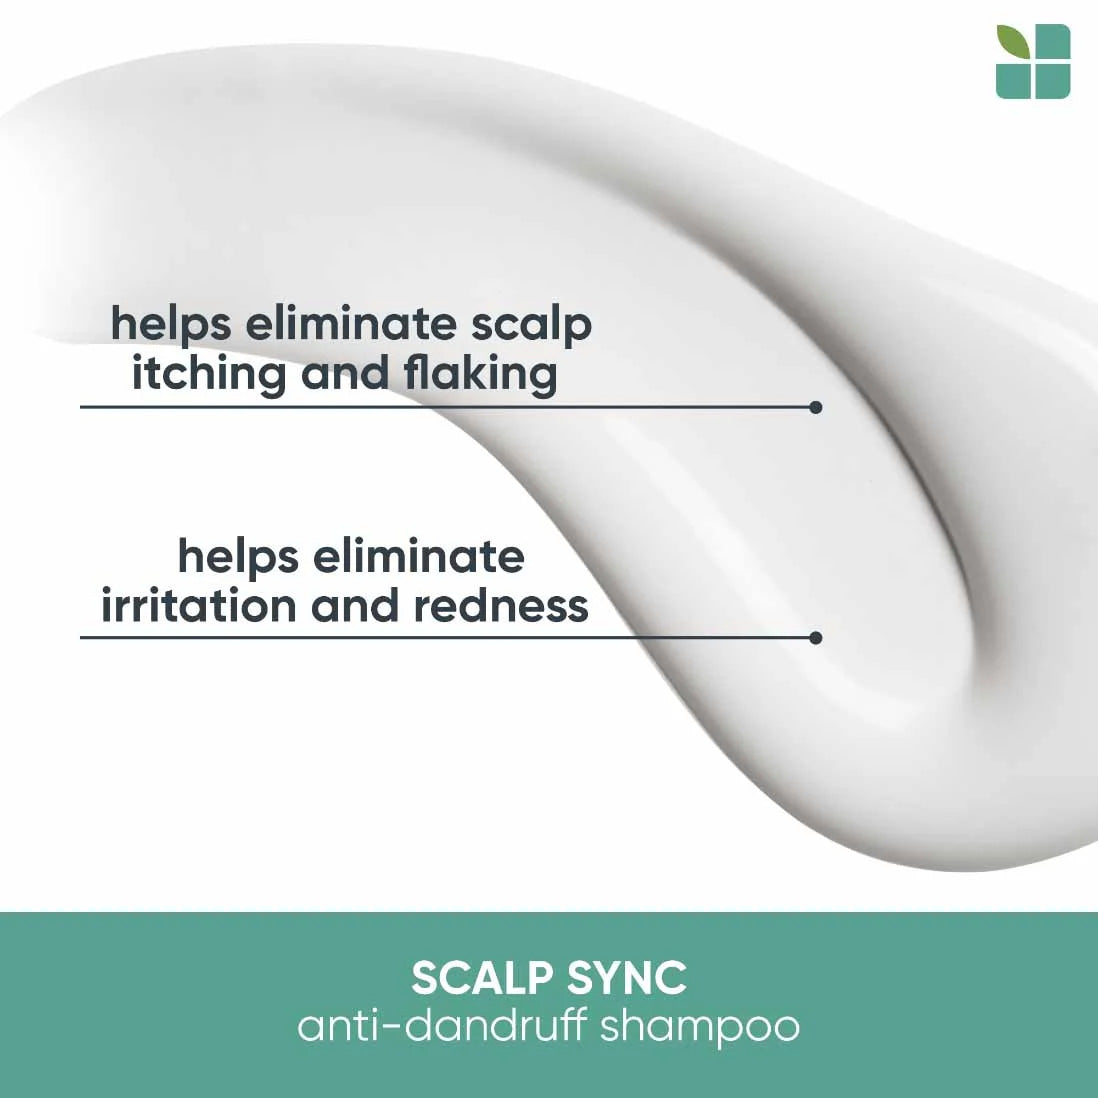 Biolage Scalp Sync Pyrithione Zinc Anti Danruff shampoo texture